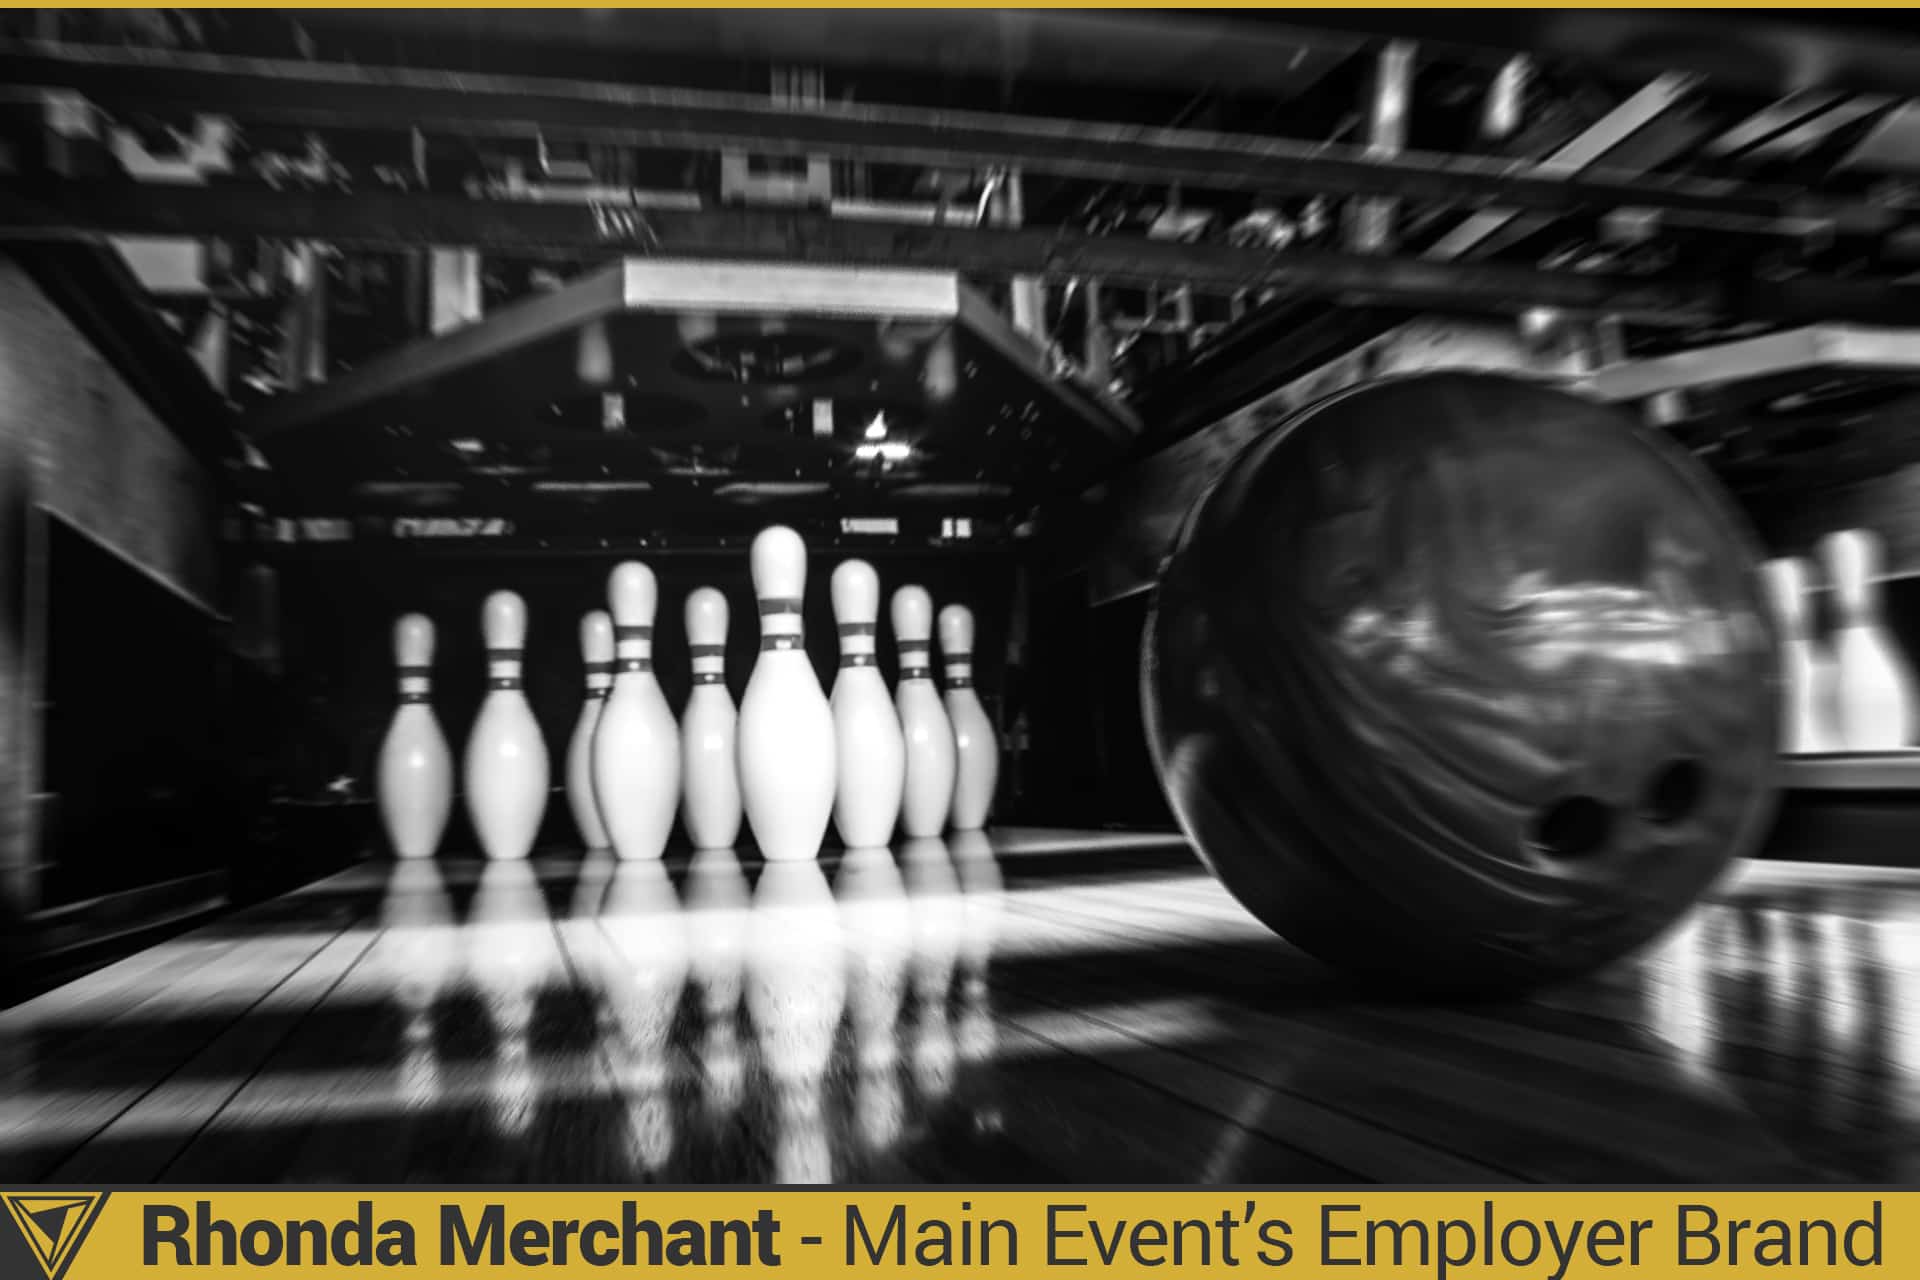 Rhonda Merchant. Bring marketing ideas to recruiting.